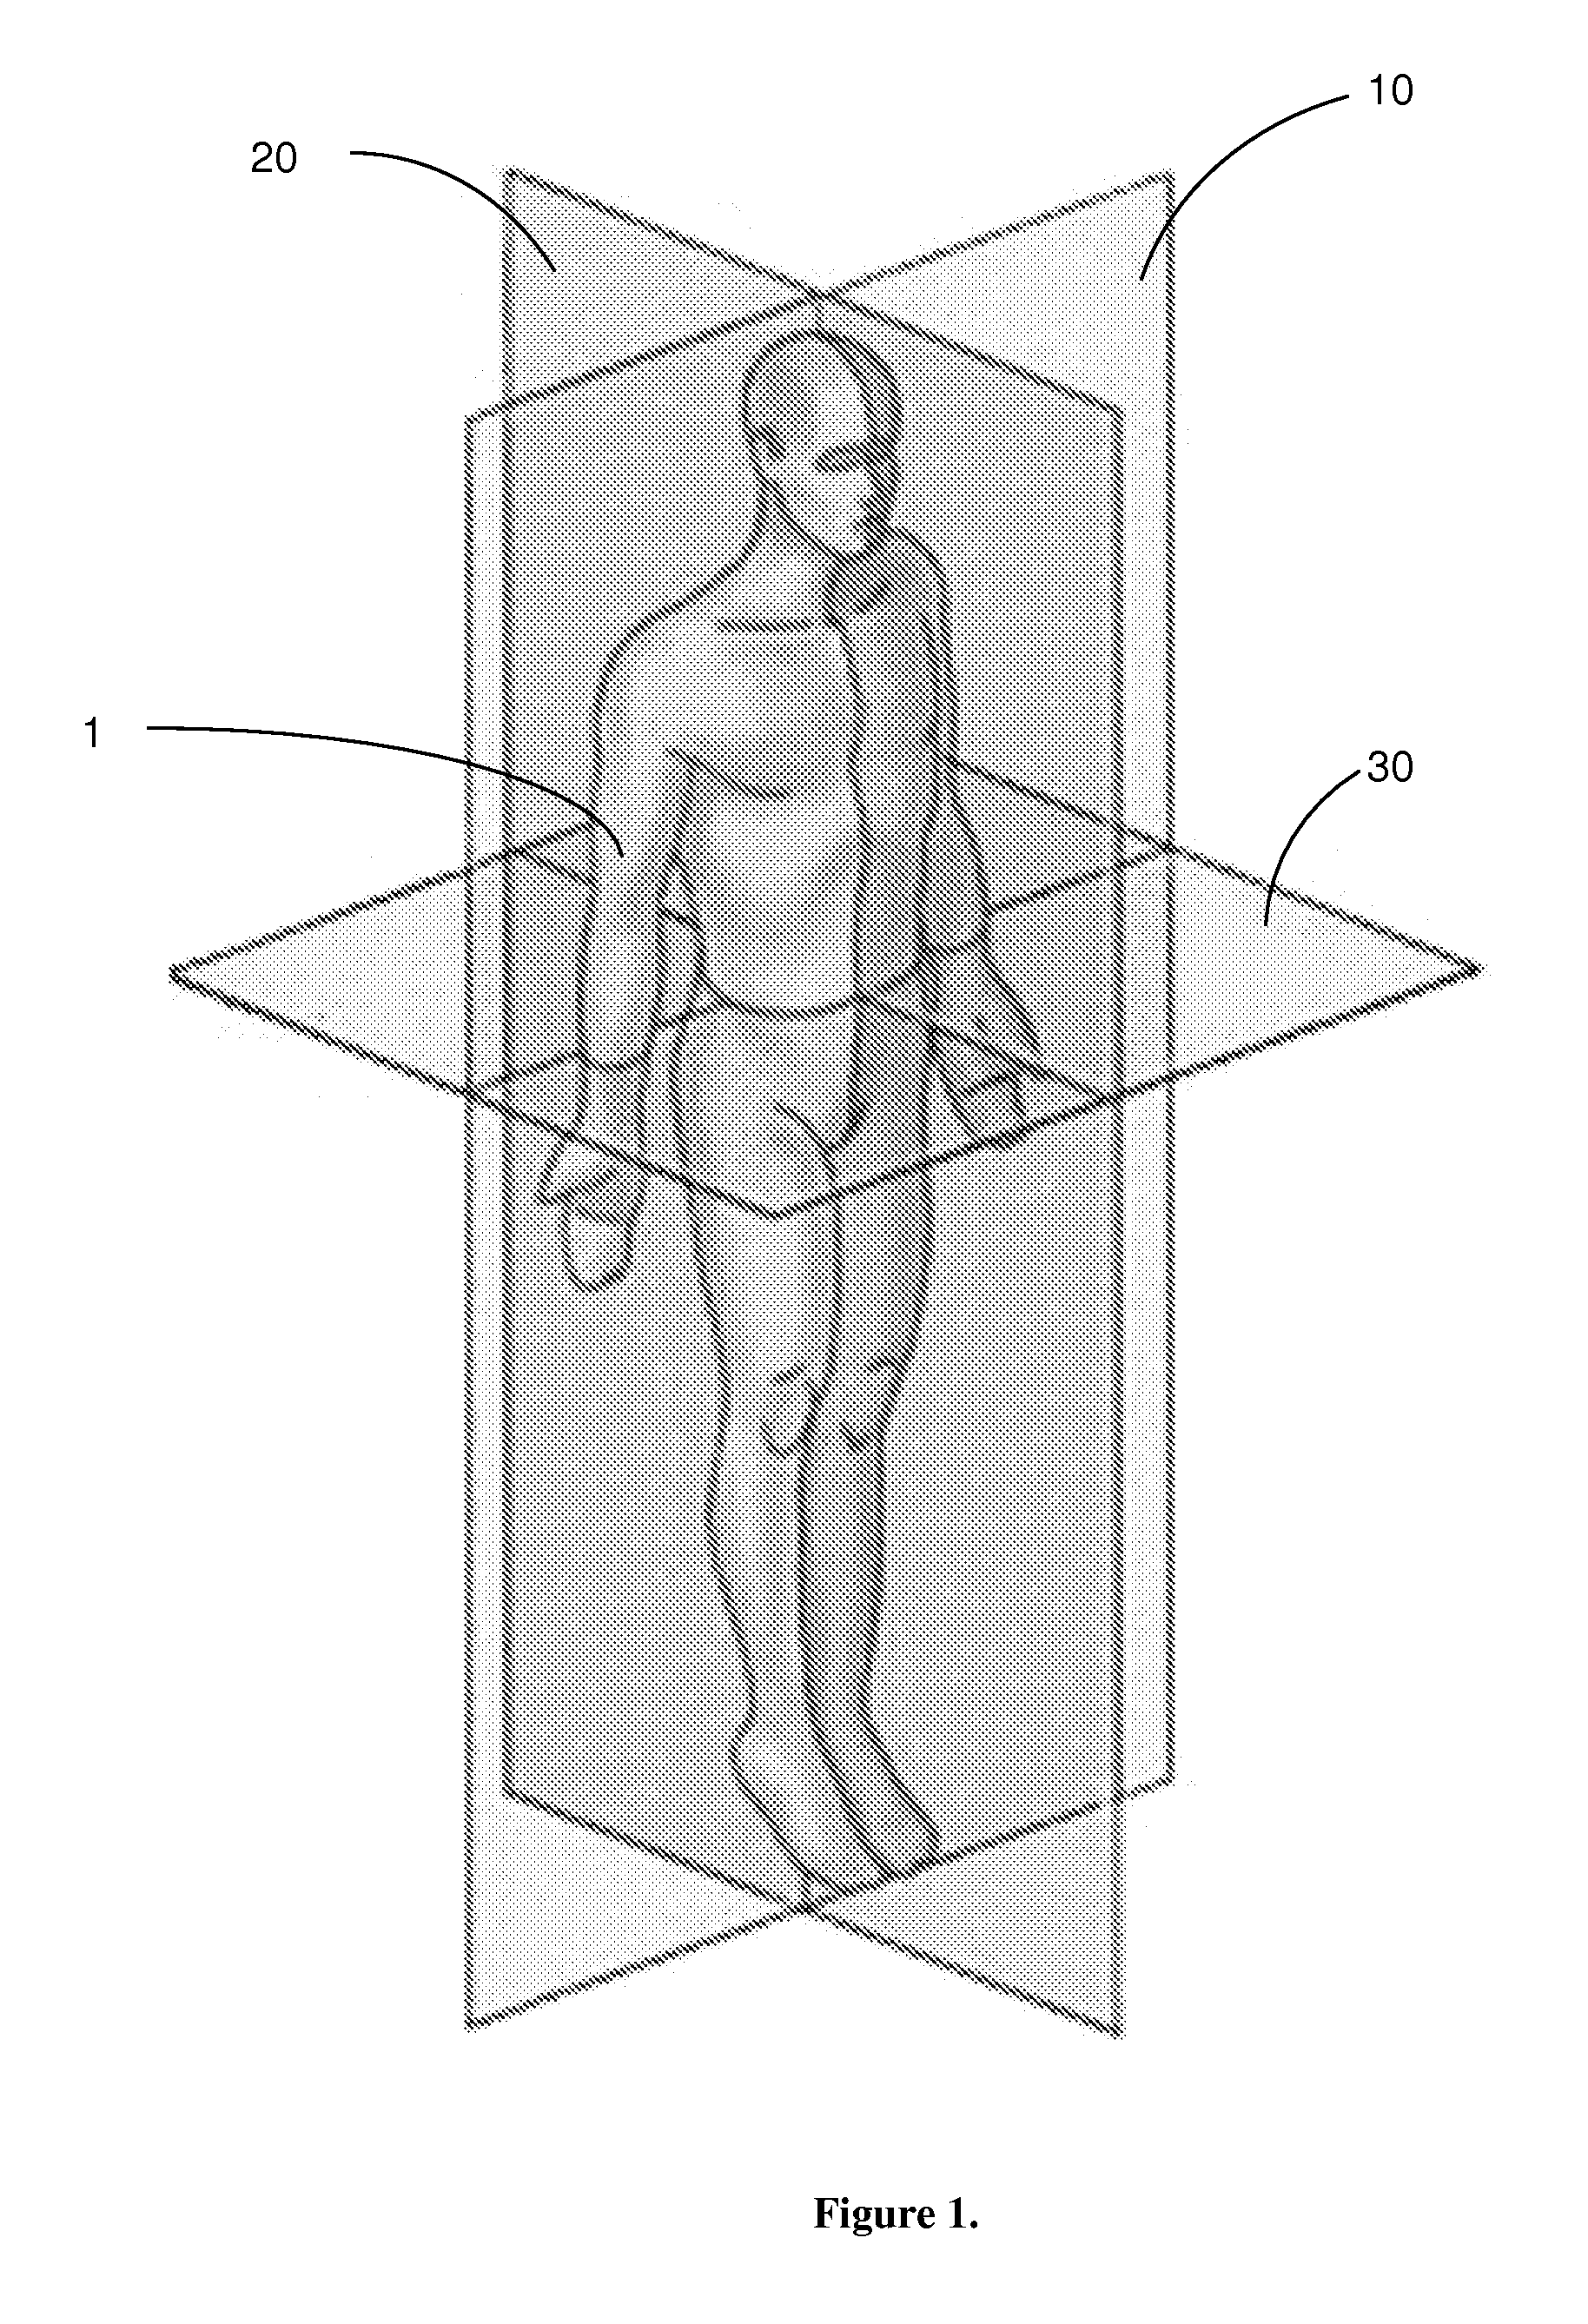 Cartesian human morpho-informatic system